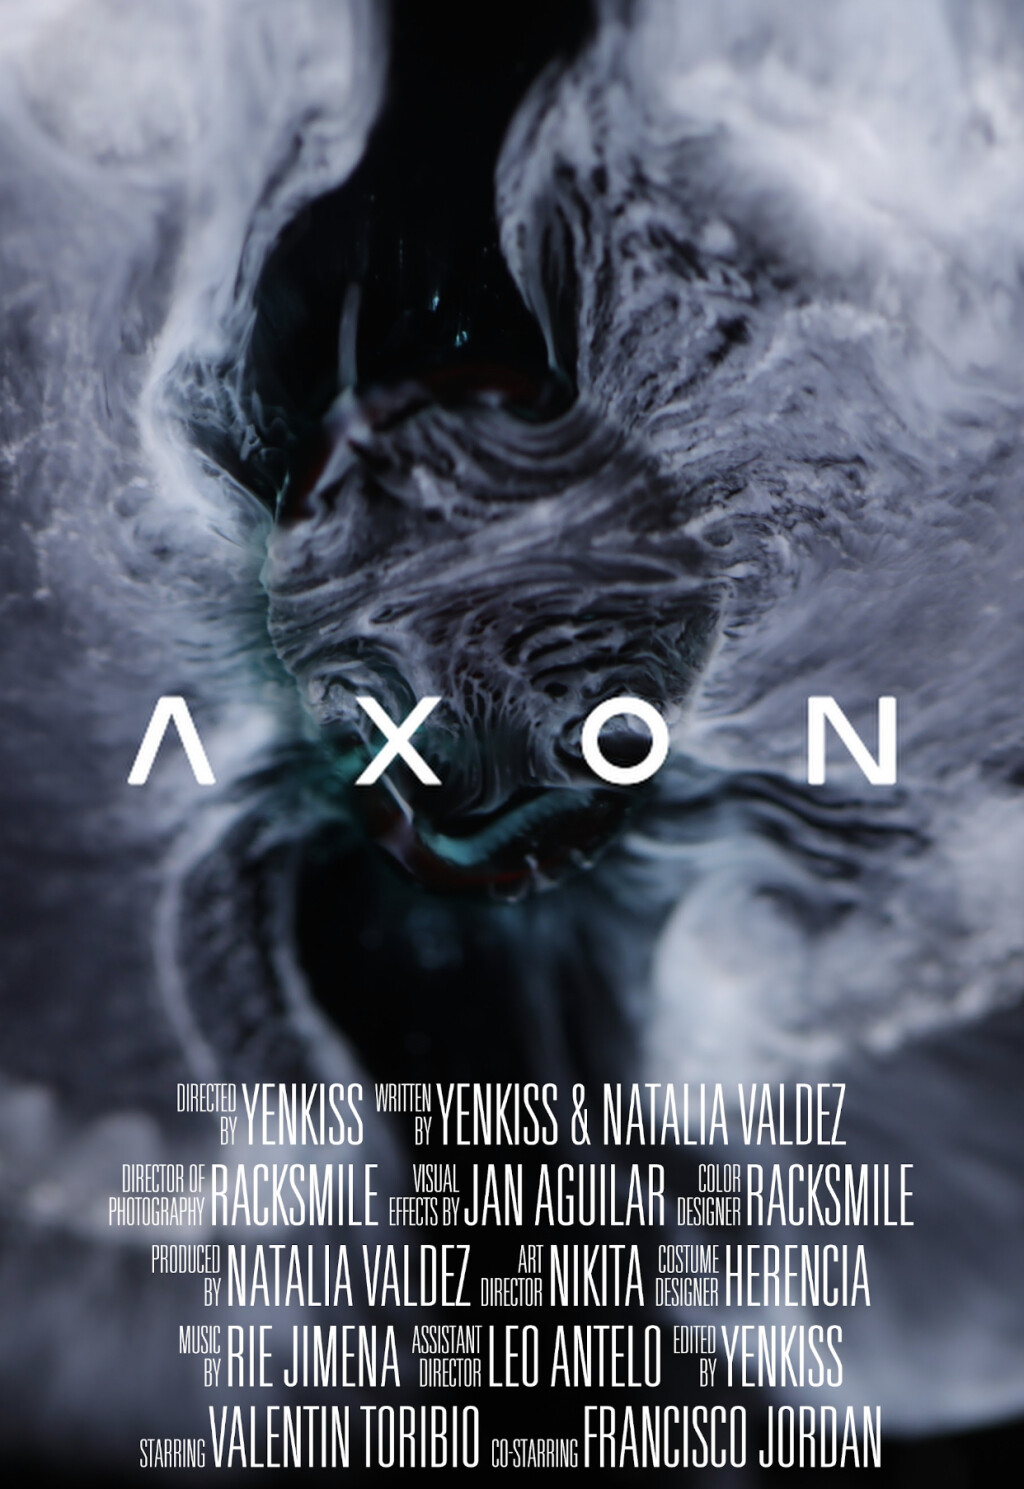 Filmposter for AXON